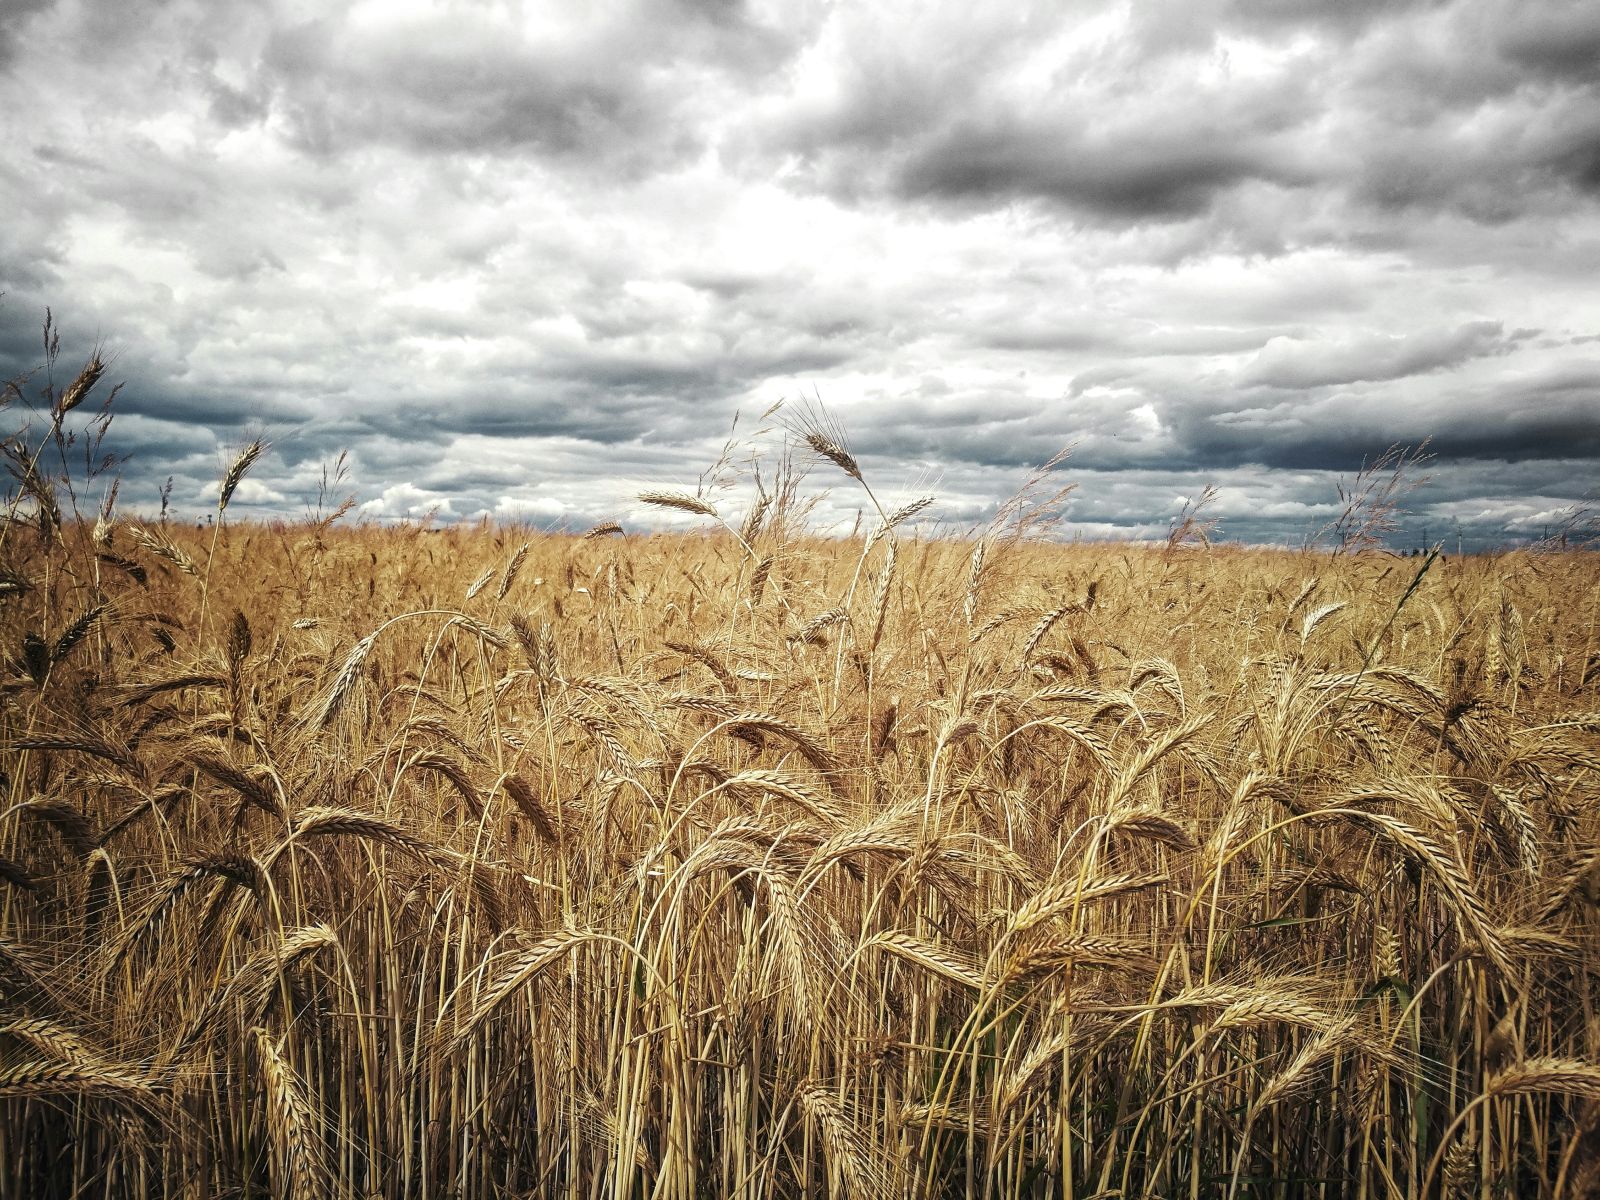 Wheat and stormy sky by Marcin Kempa via Unsplash